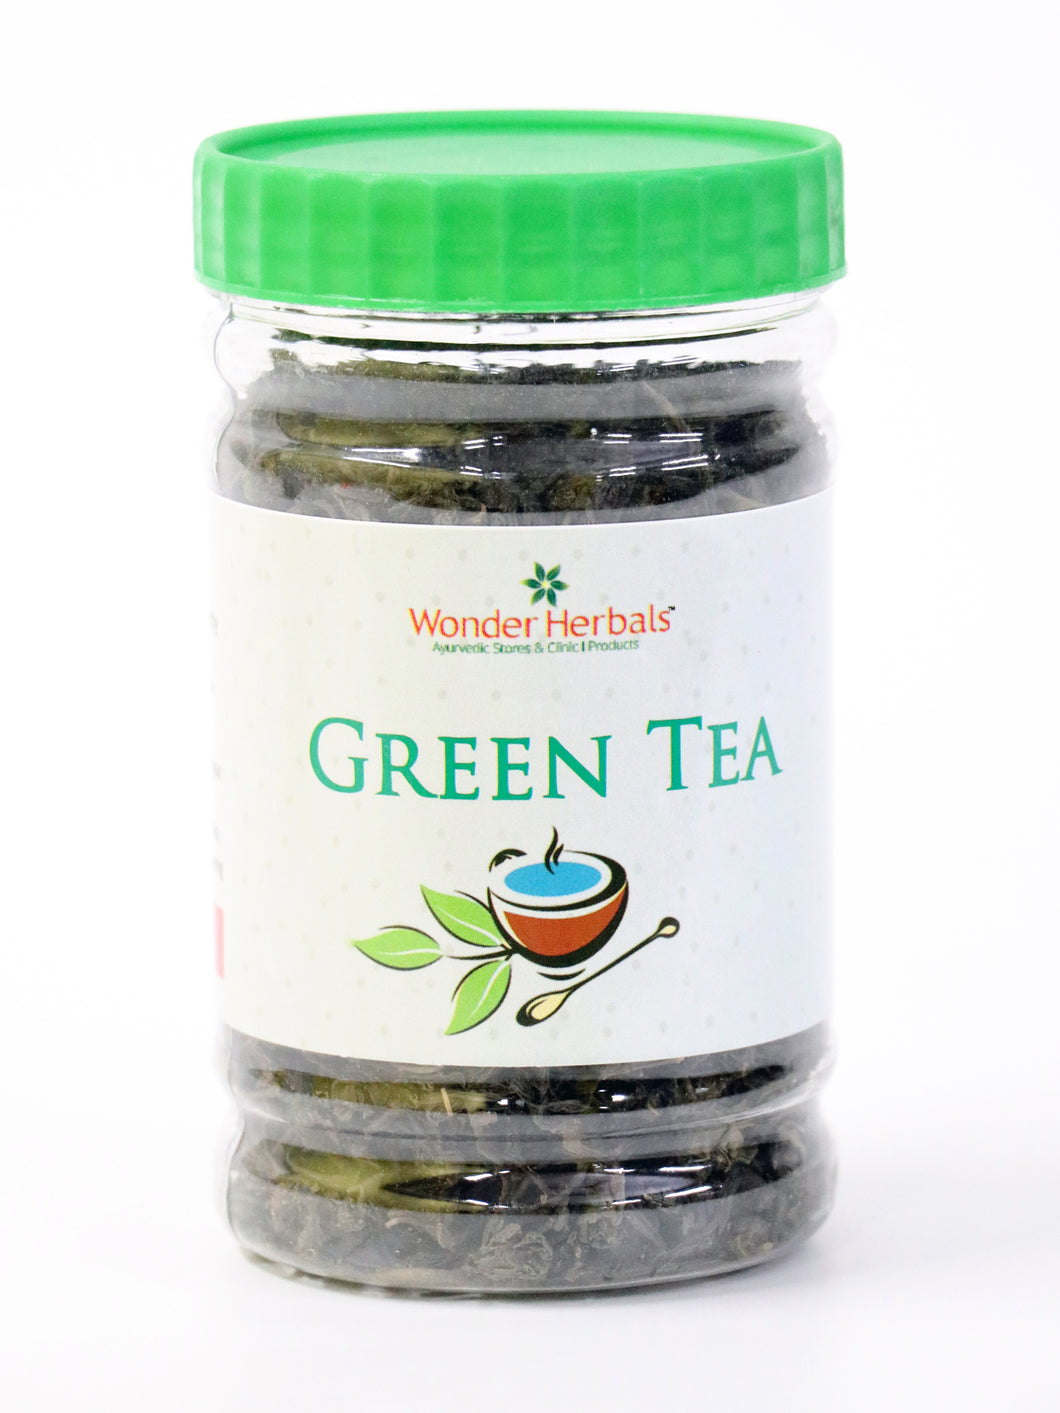 Green Tea - Wonder Herbals India